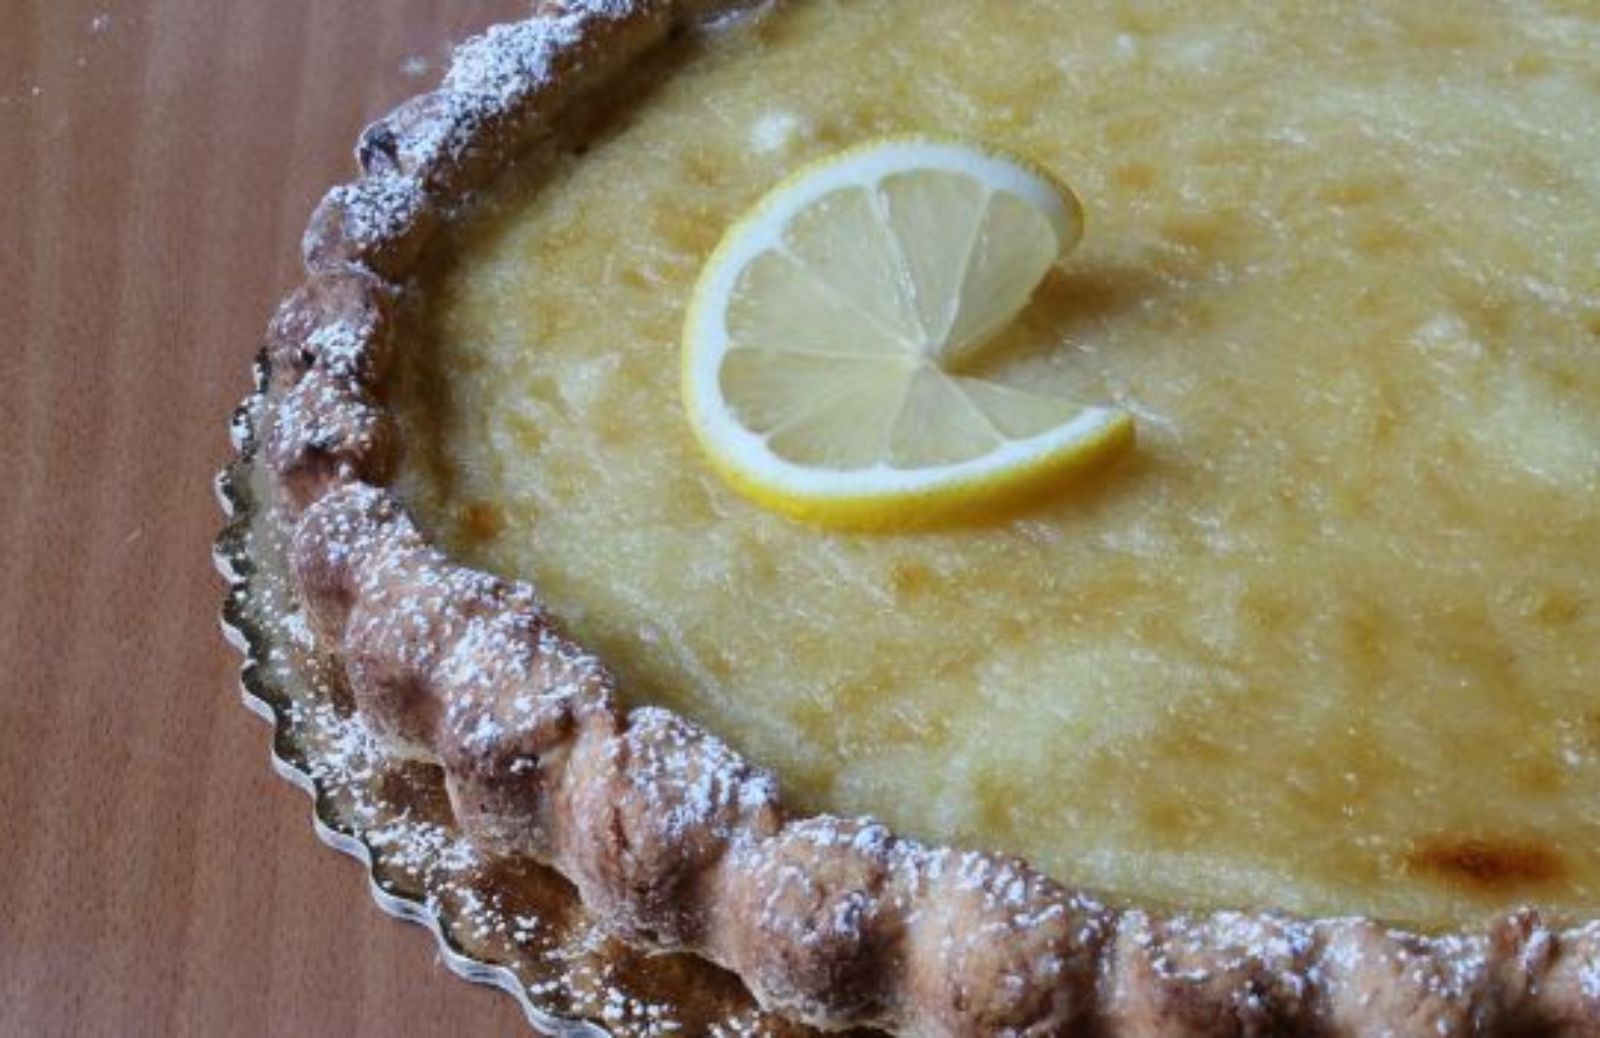 Dessert nichel free: la crostata al limone